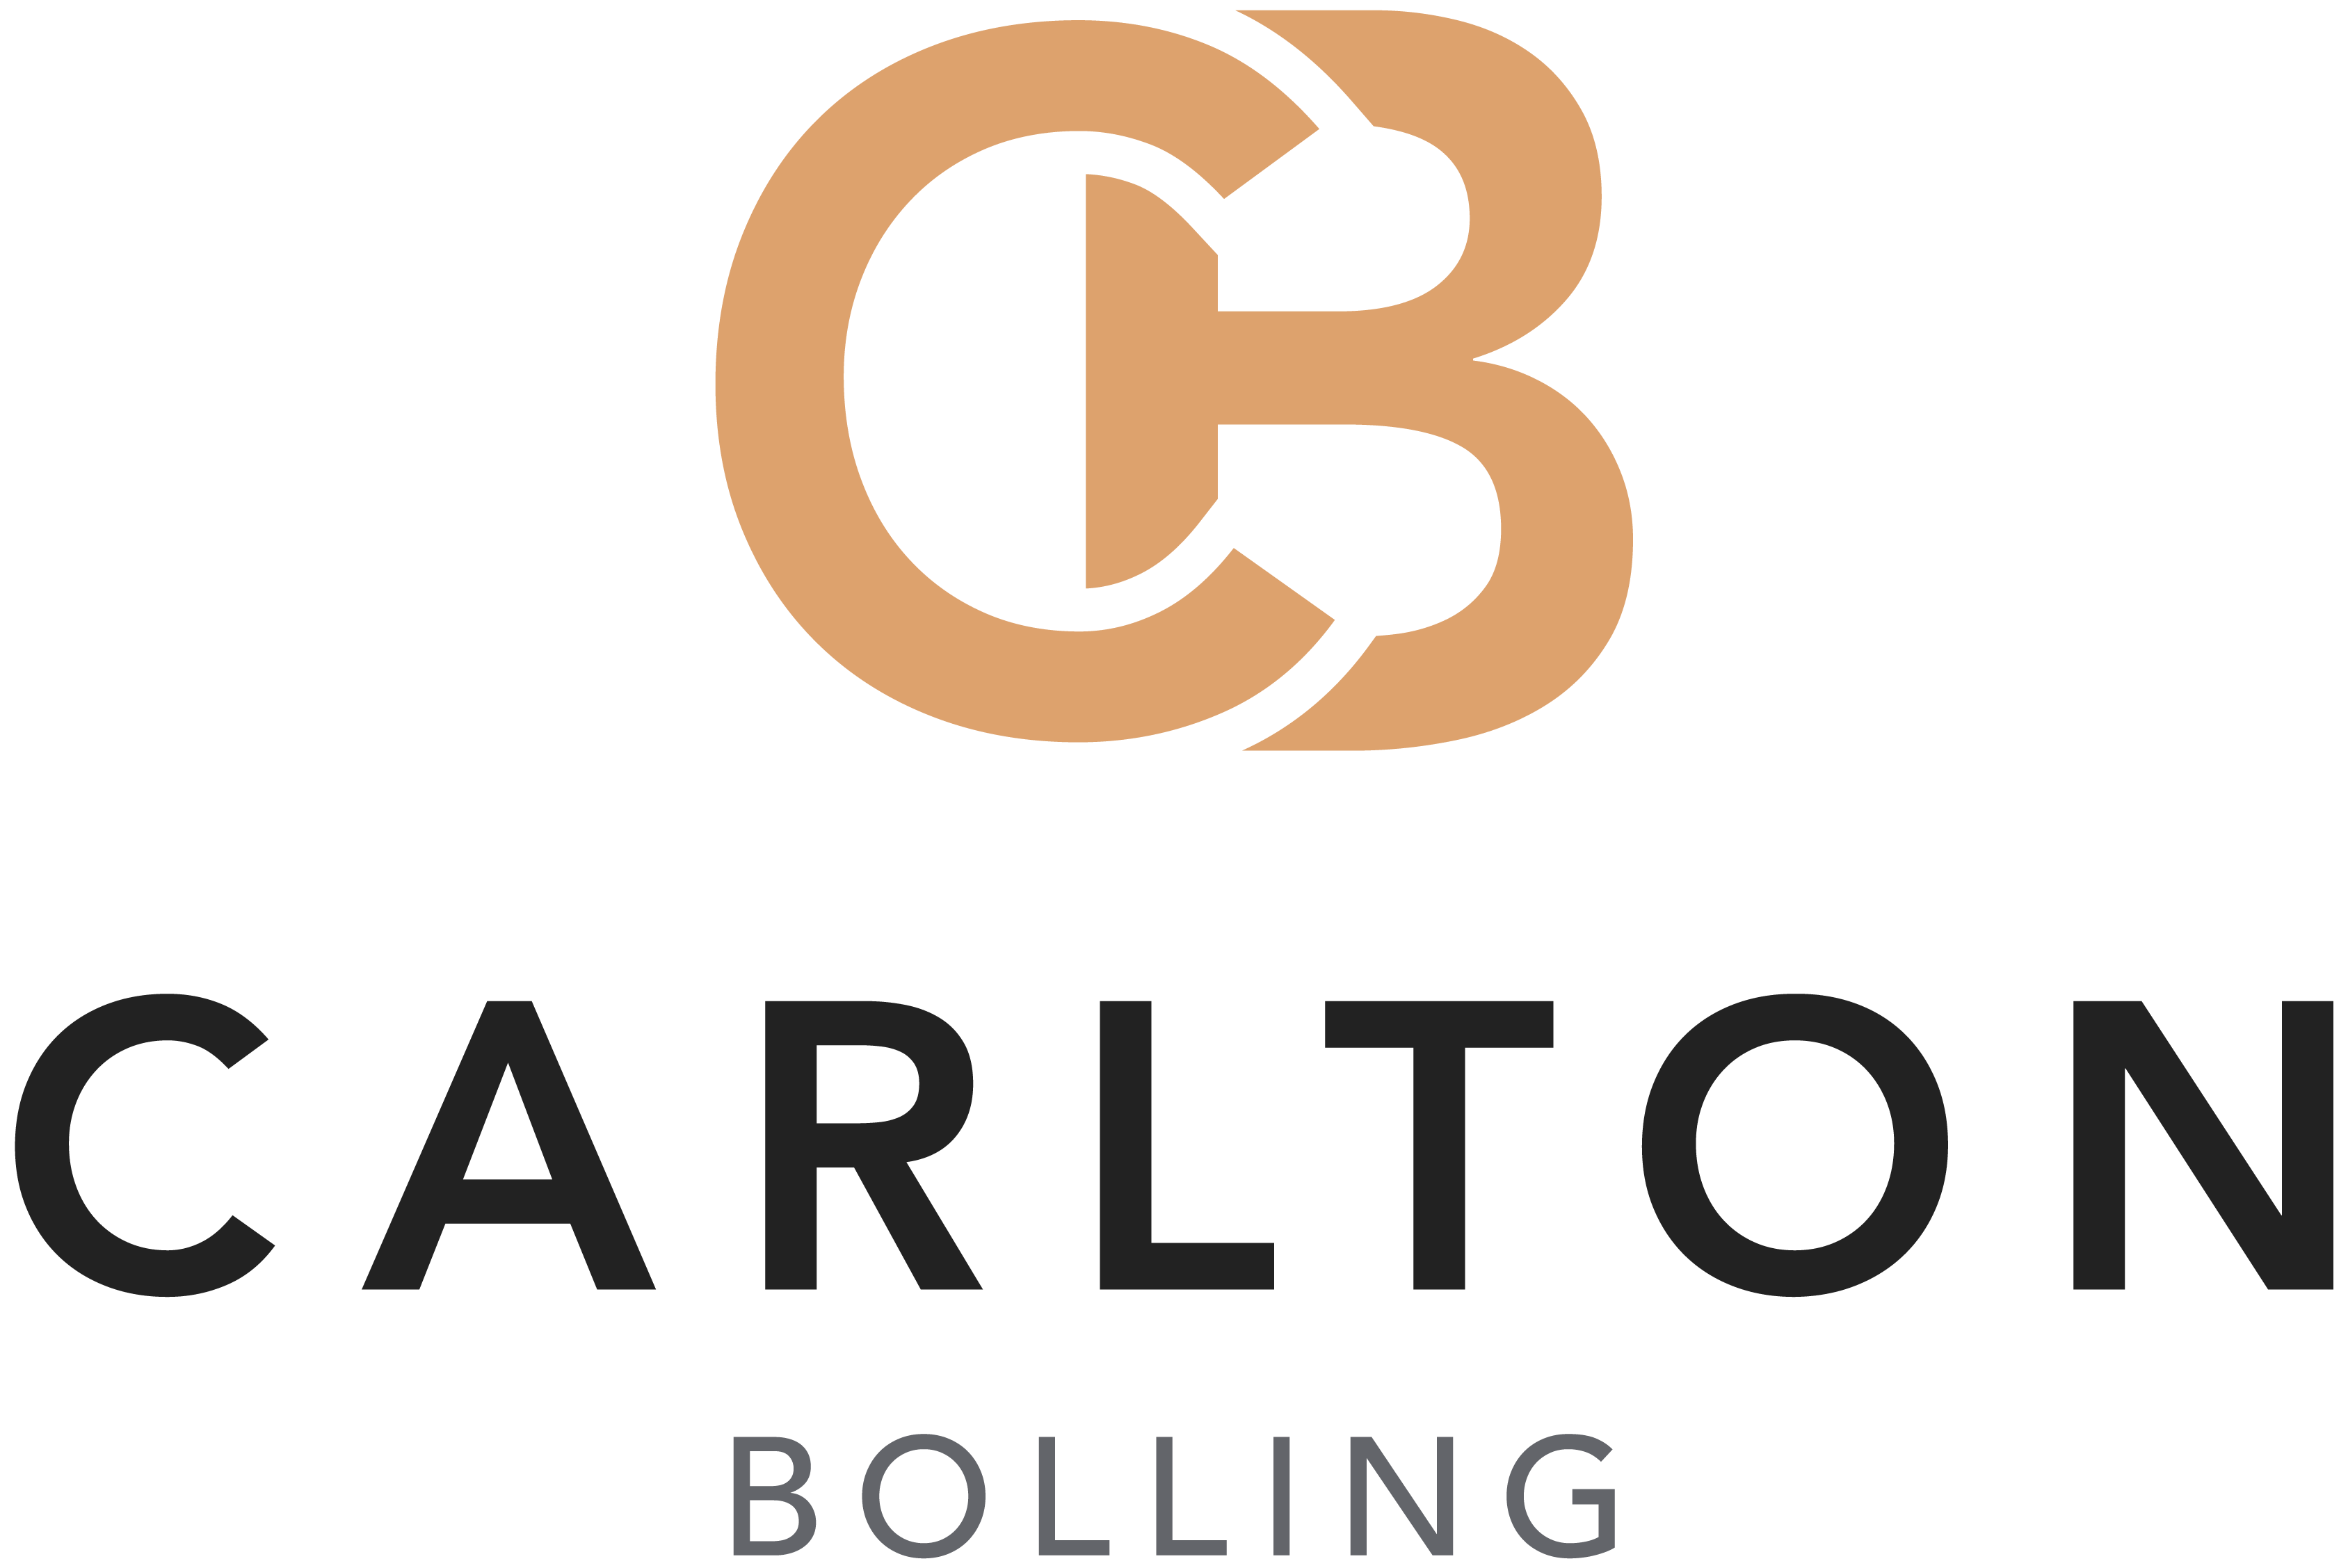 Carlton Bolling logo